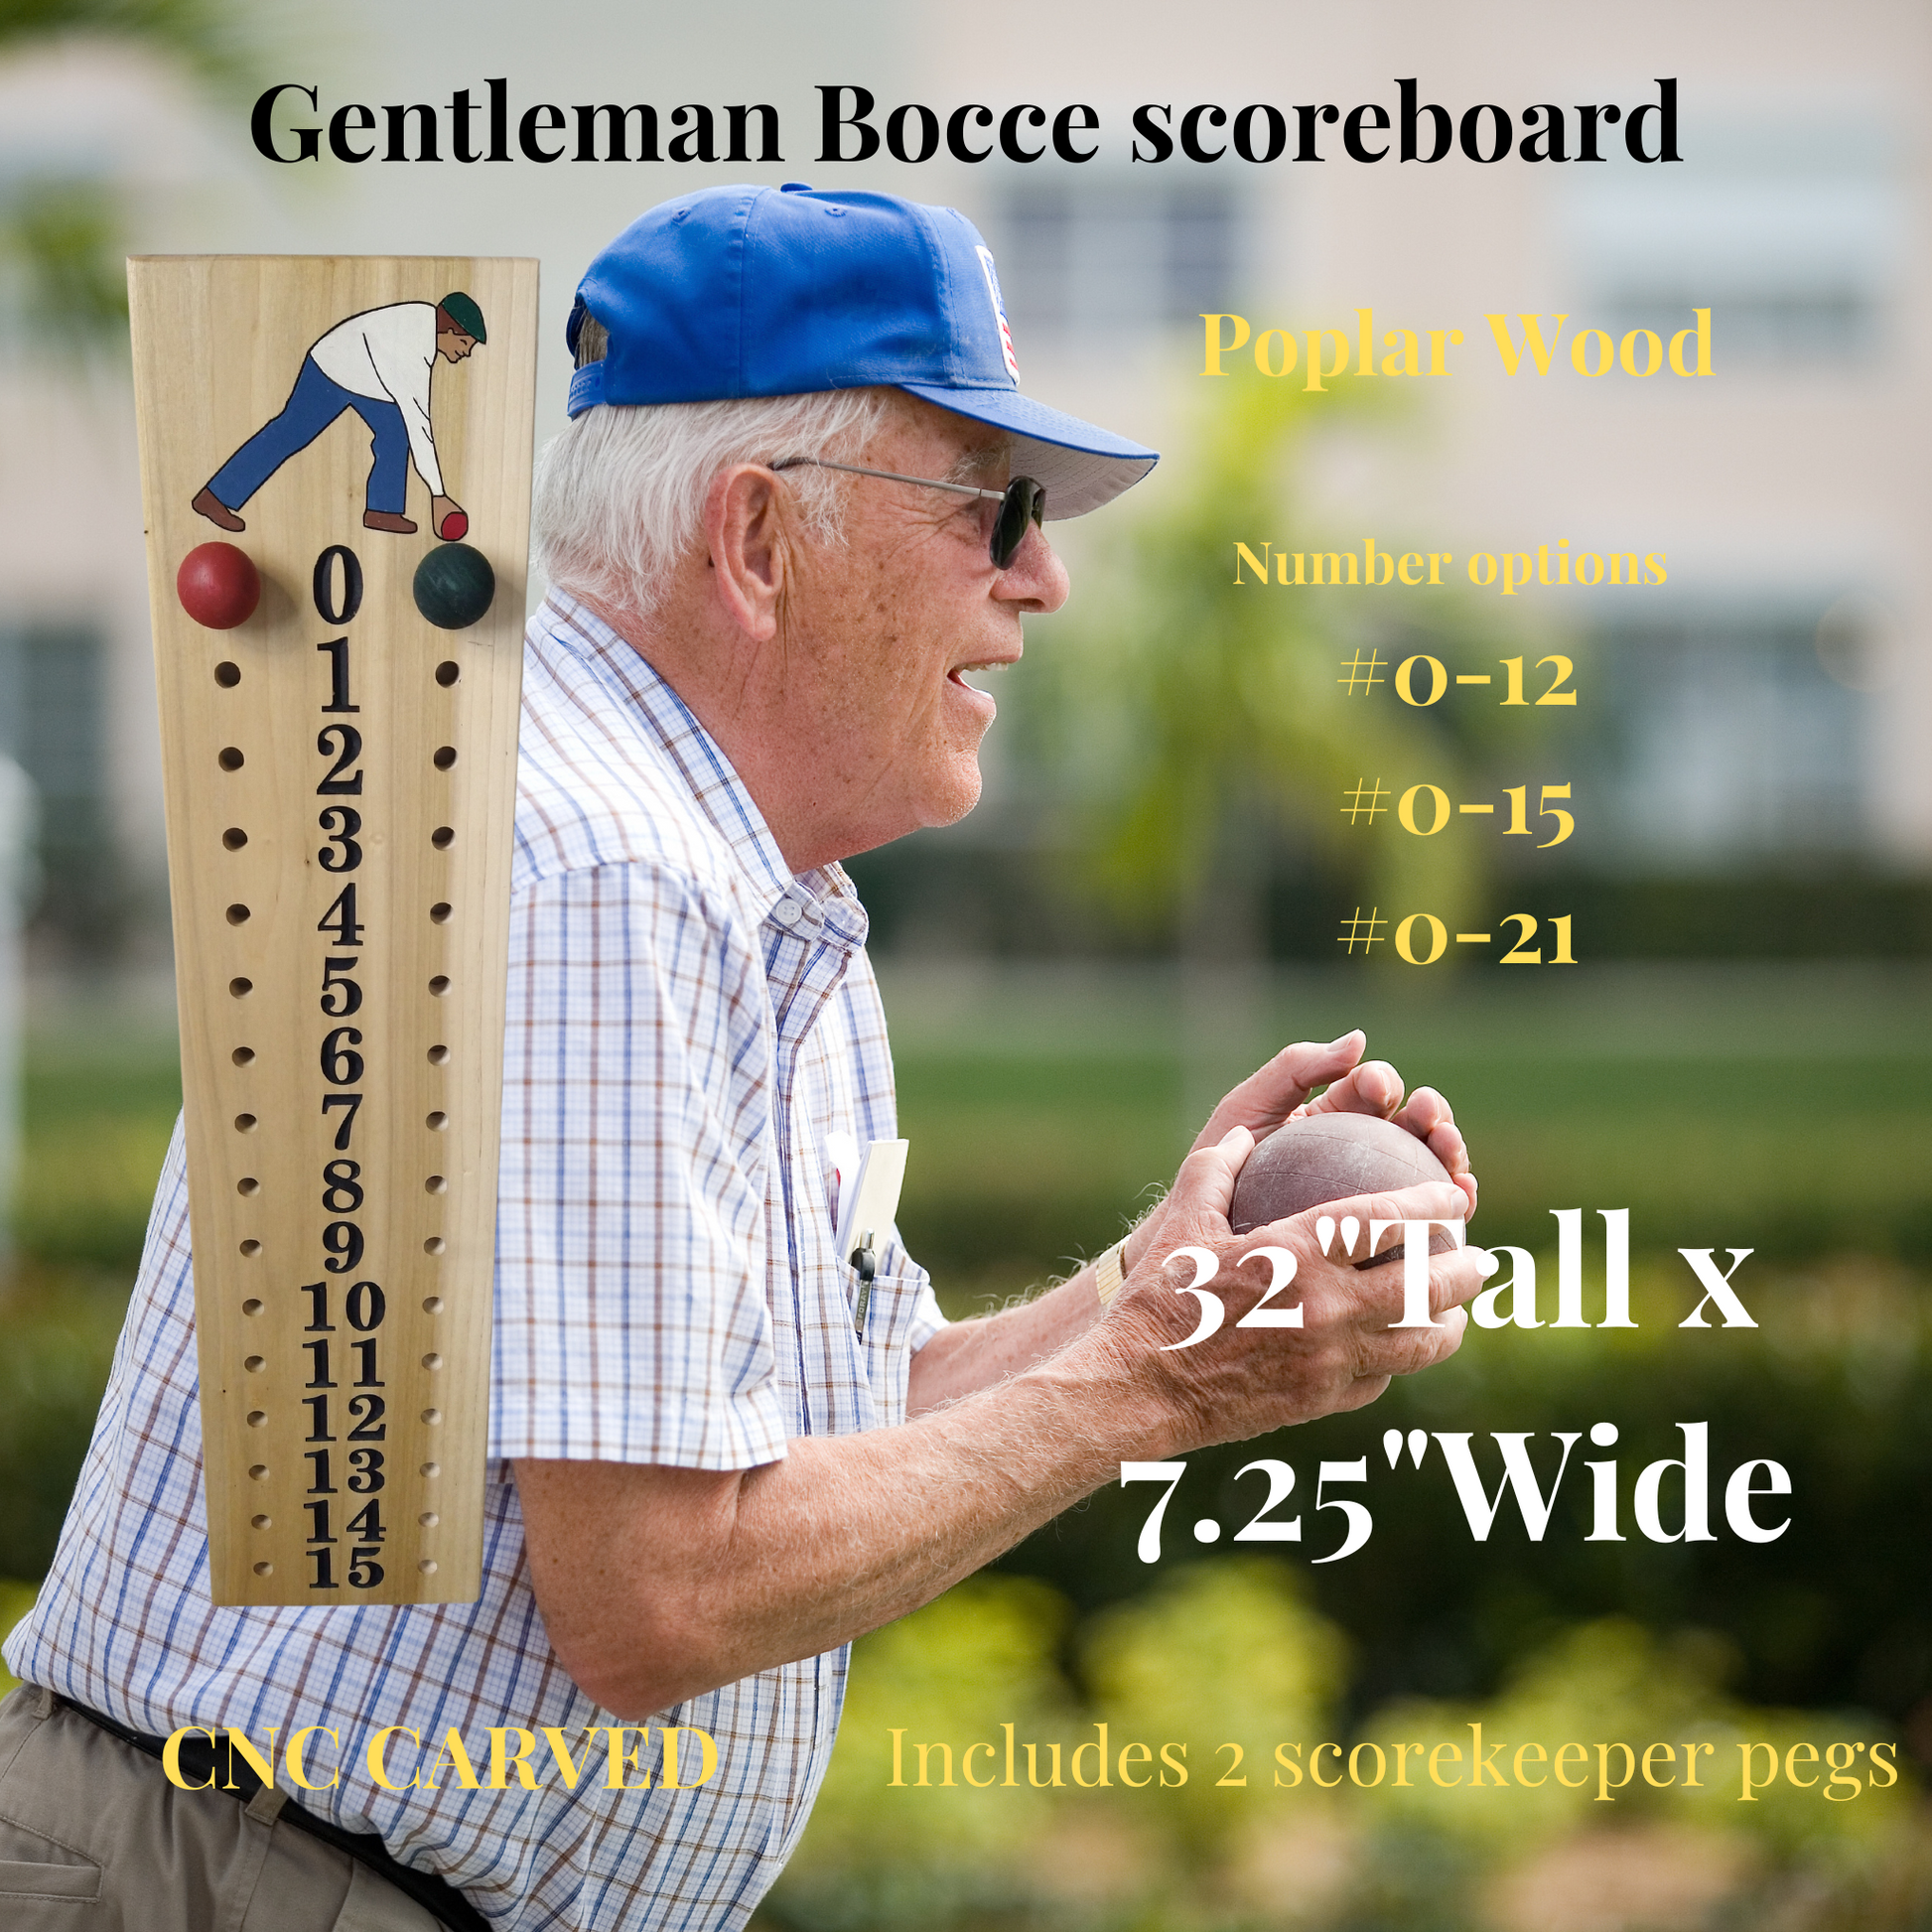 Poplar bocce scoreboard 0-15 with gentleman image at top